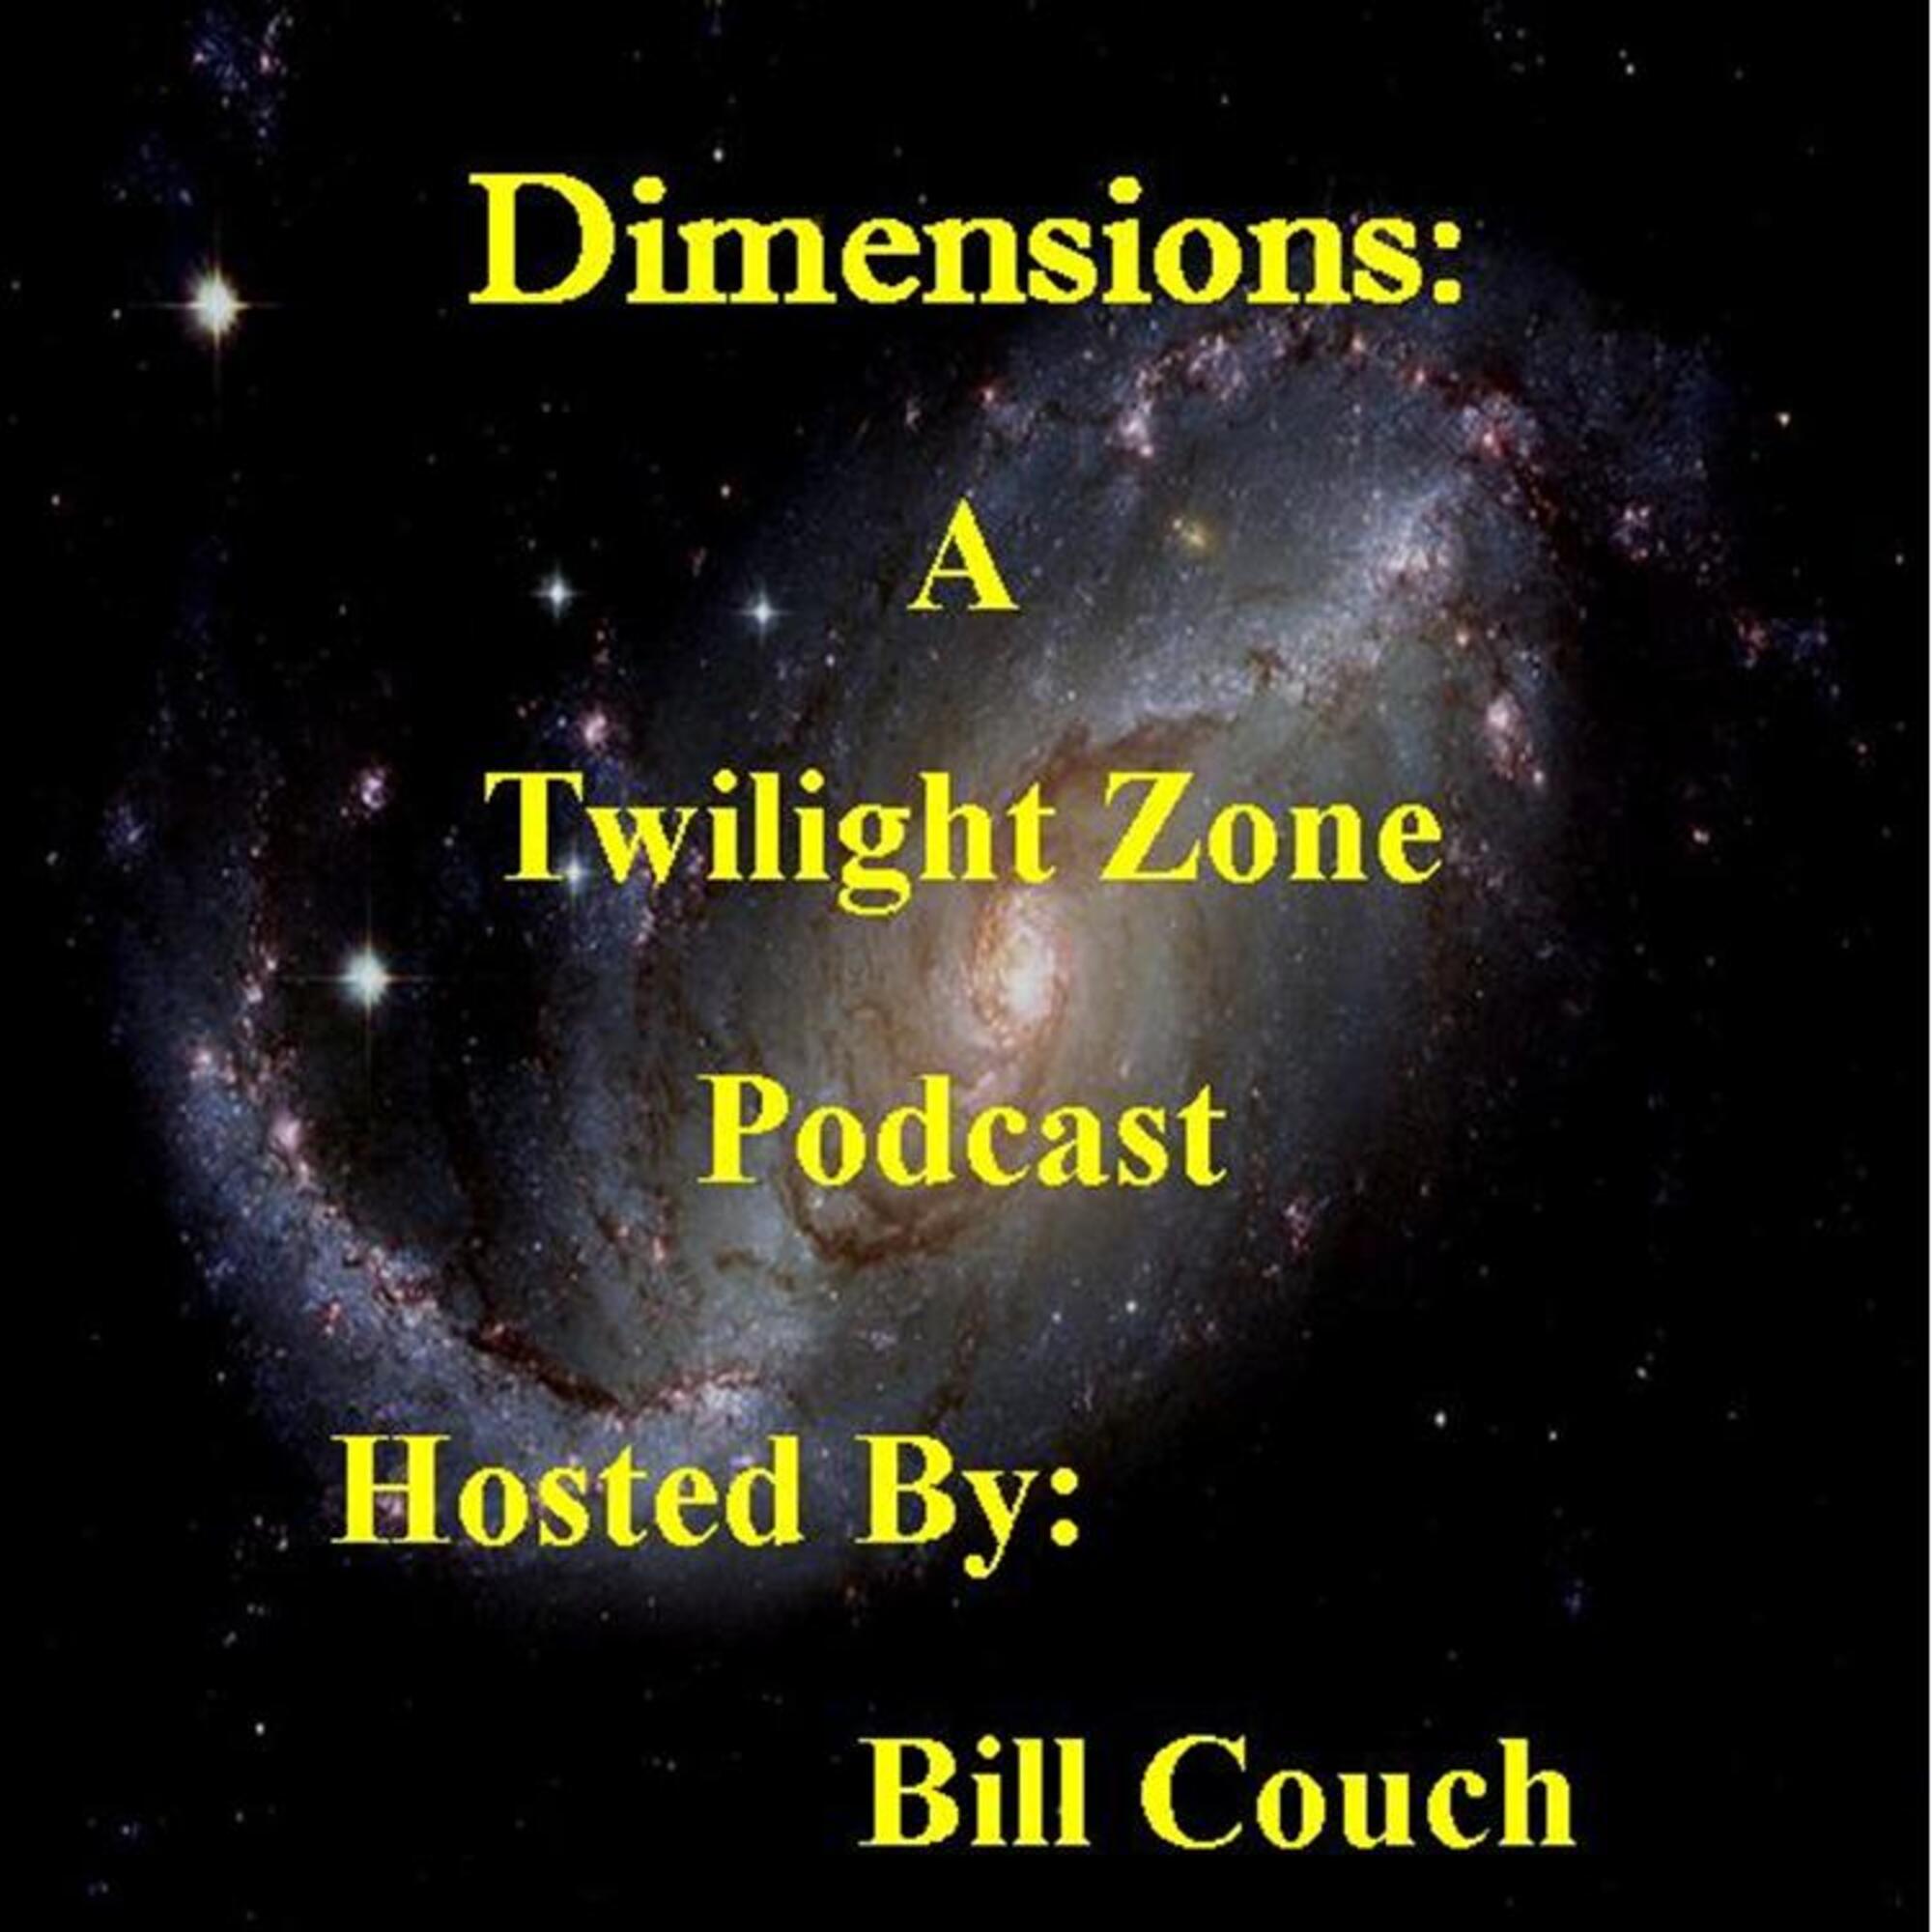 Dimensions: A Twilight Zone Podcast Episode 9 ”Perchance to Dream”